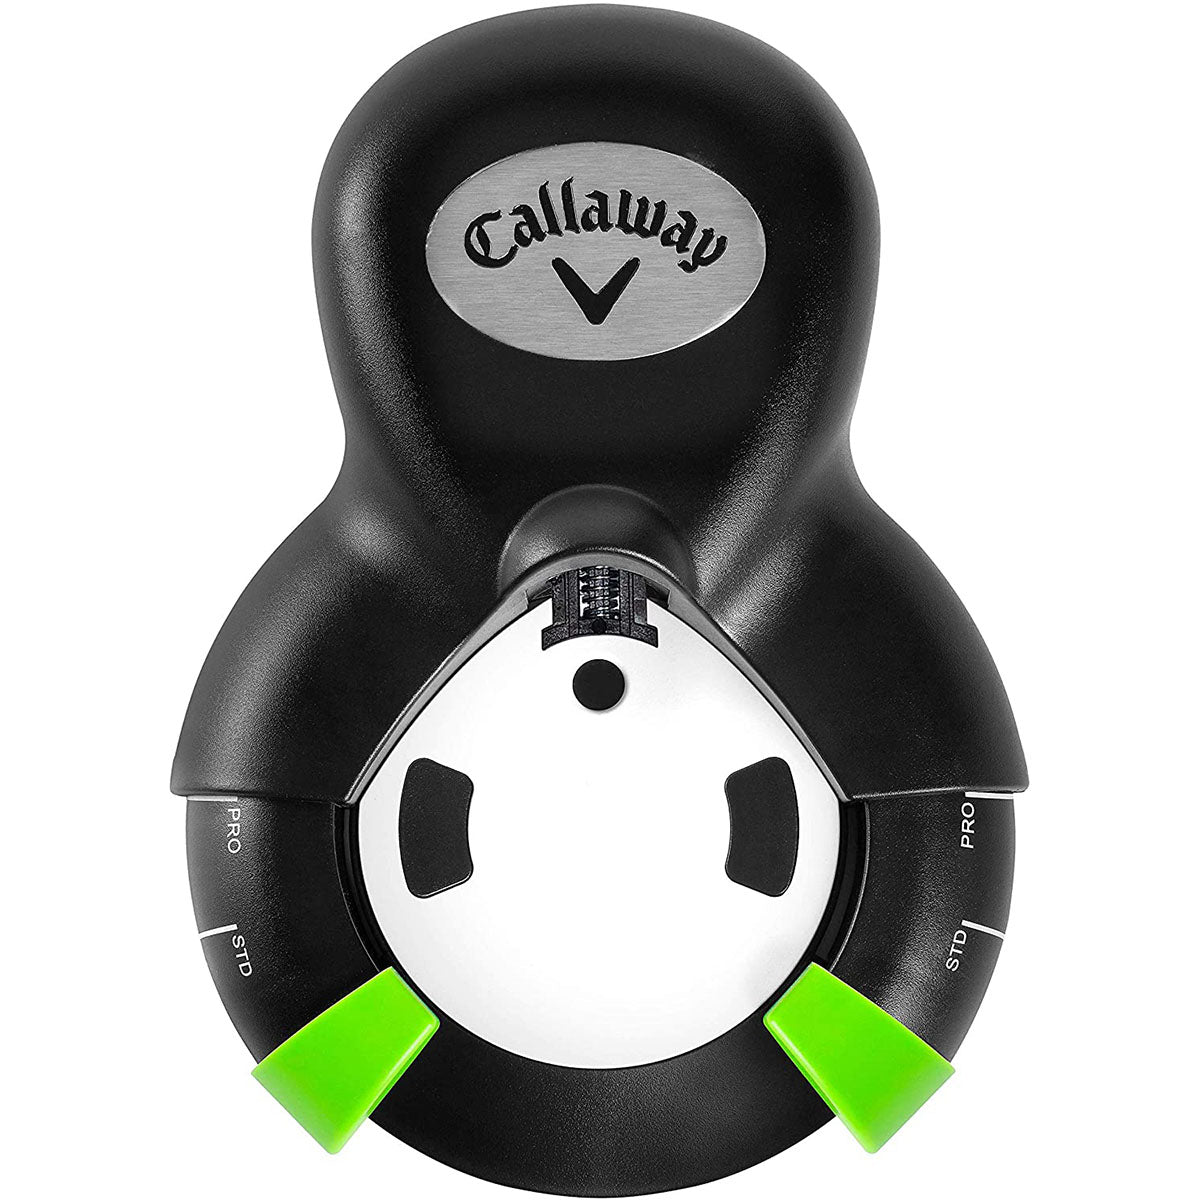 Callaway Cordless Kickback Putt Cup Golf Training Aid Set - Black Callaway